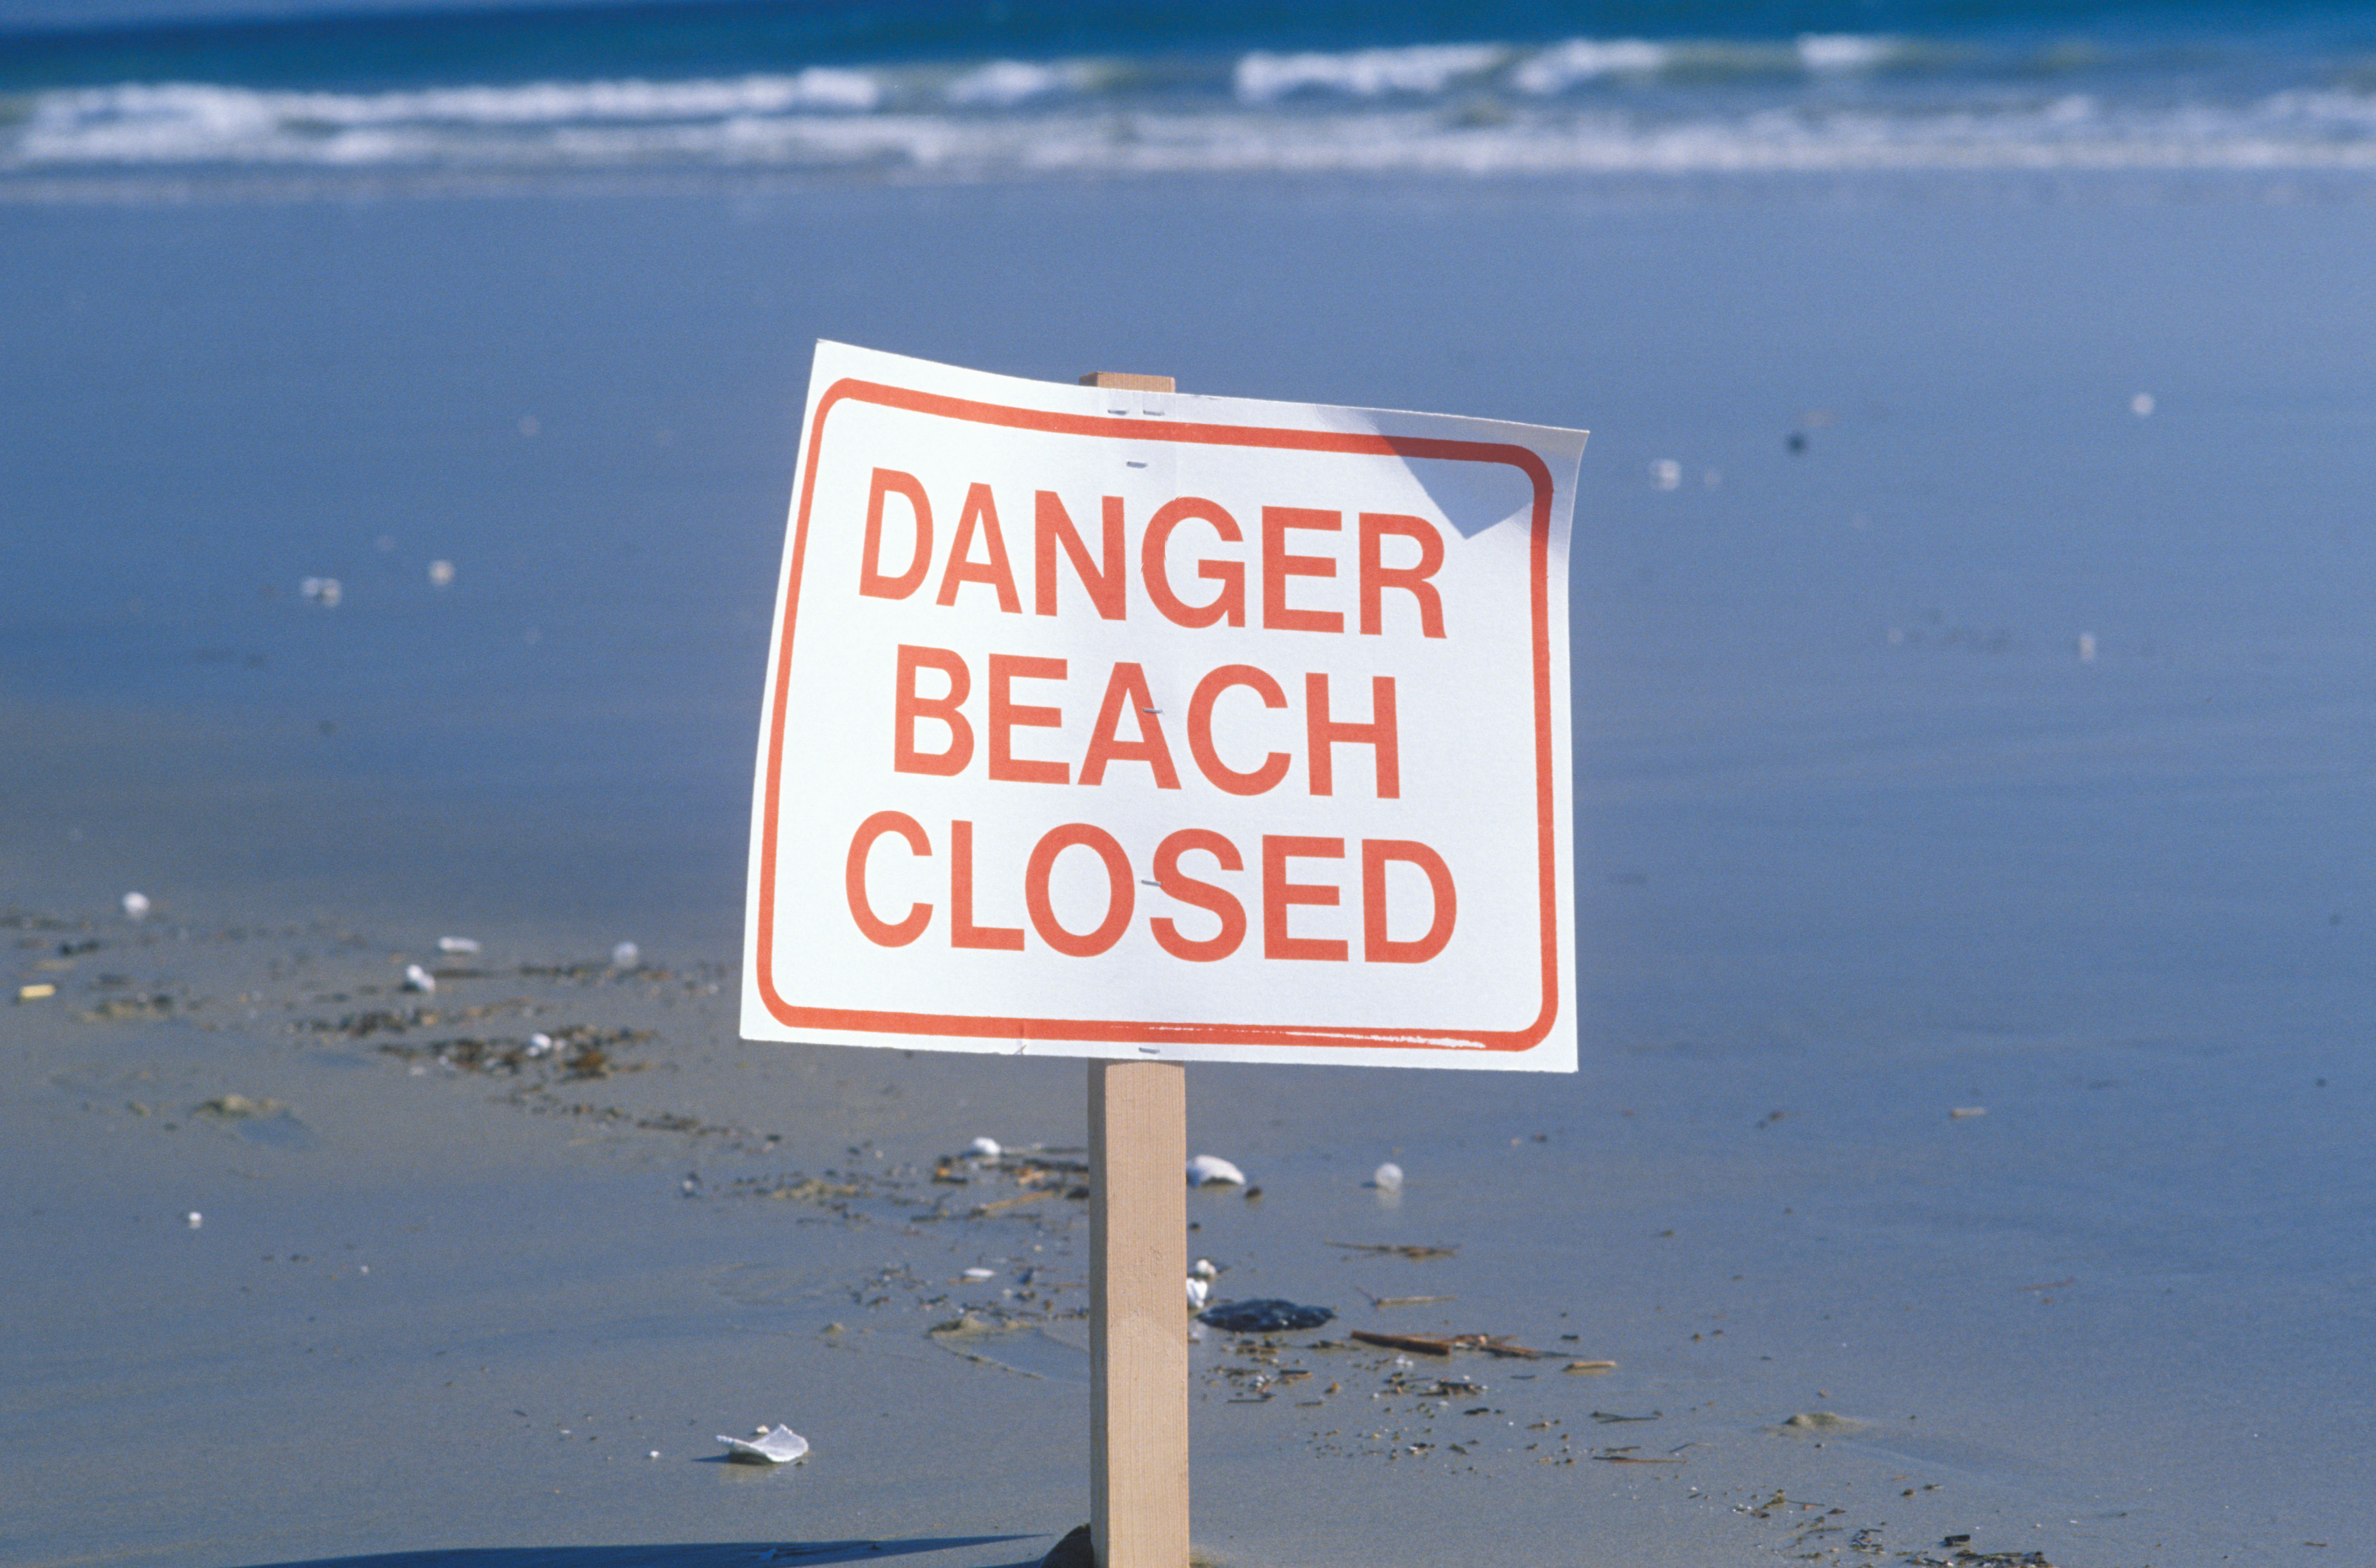 "Beach closed" sign.